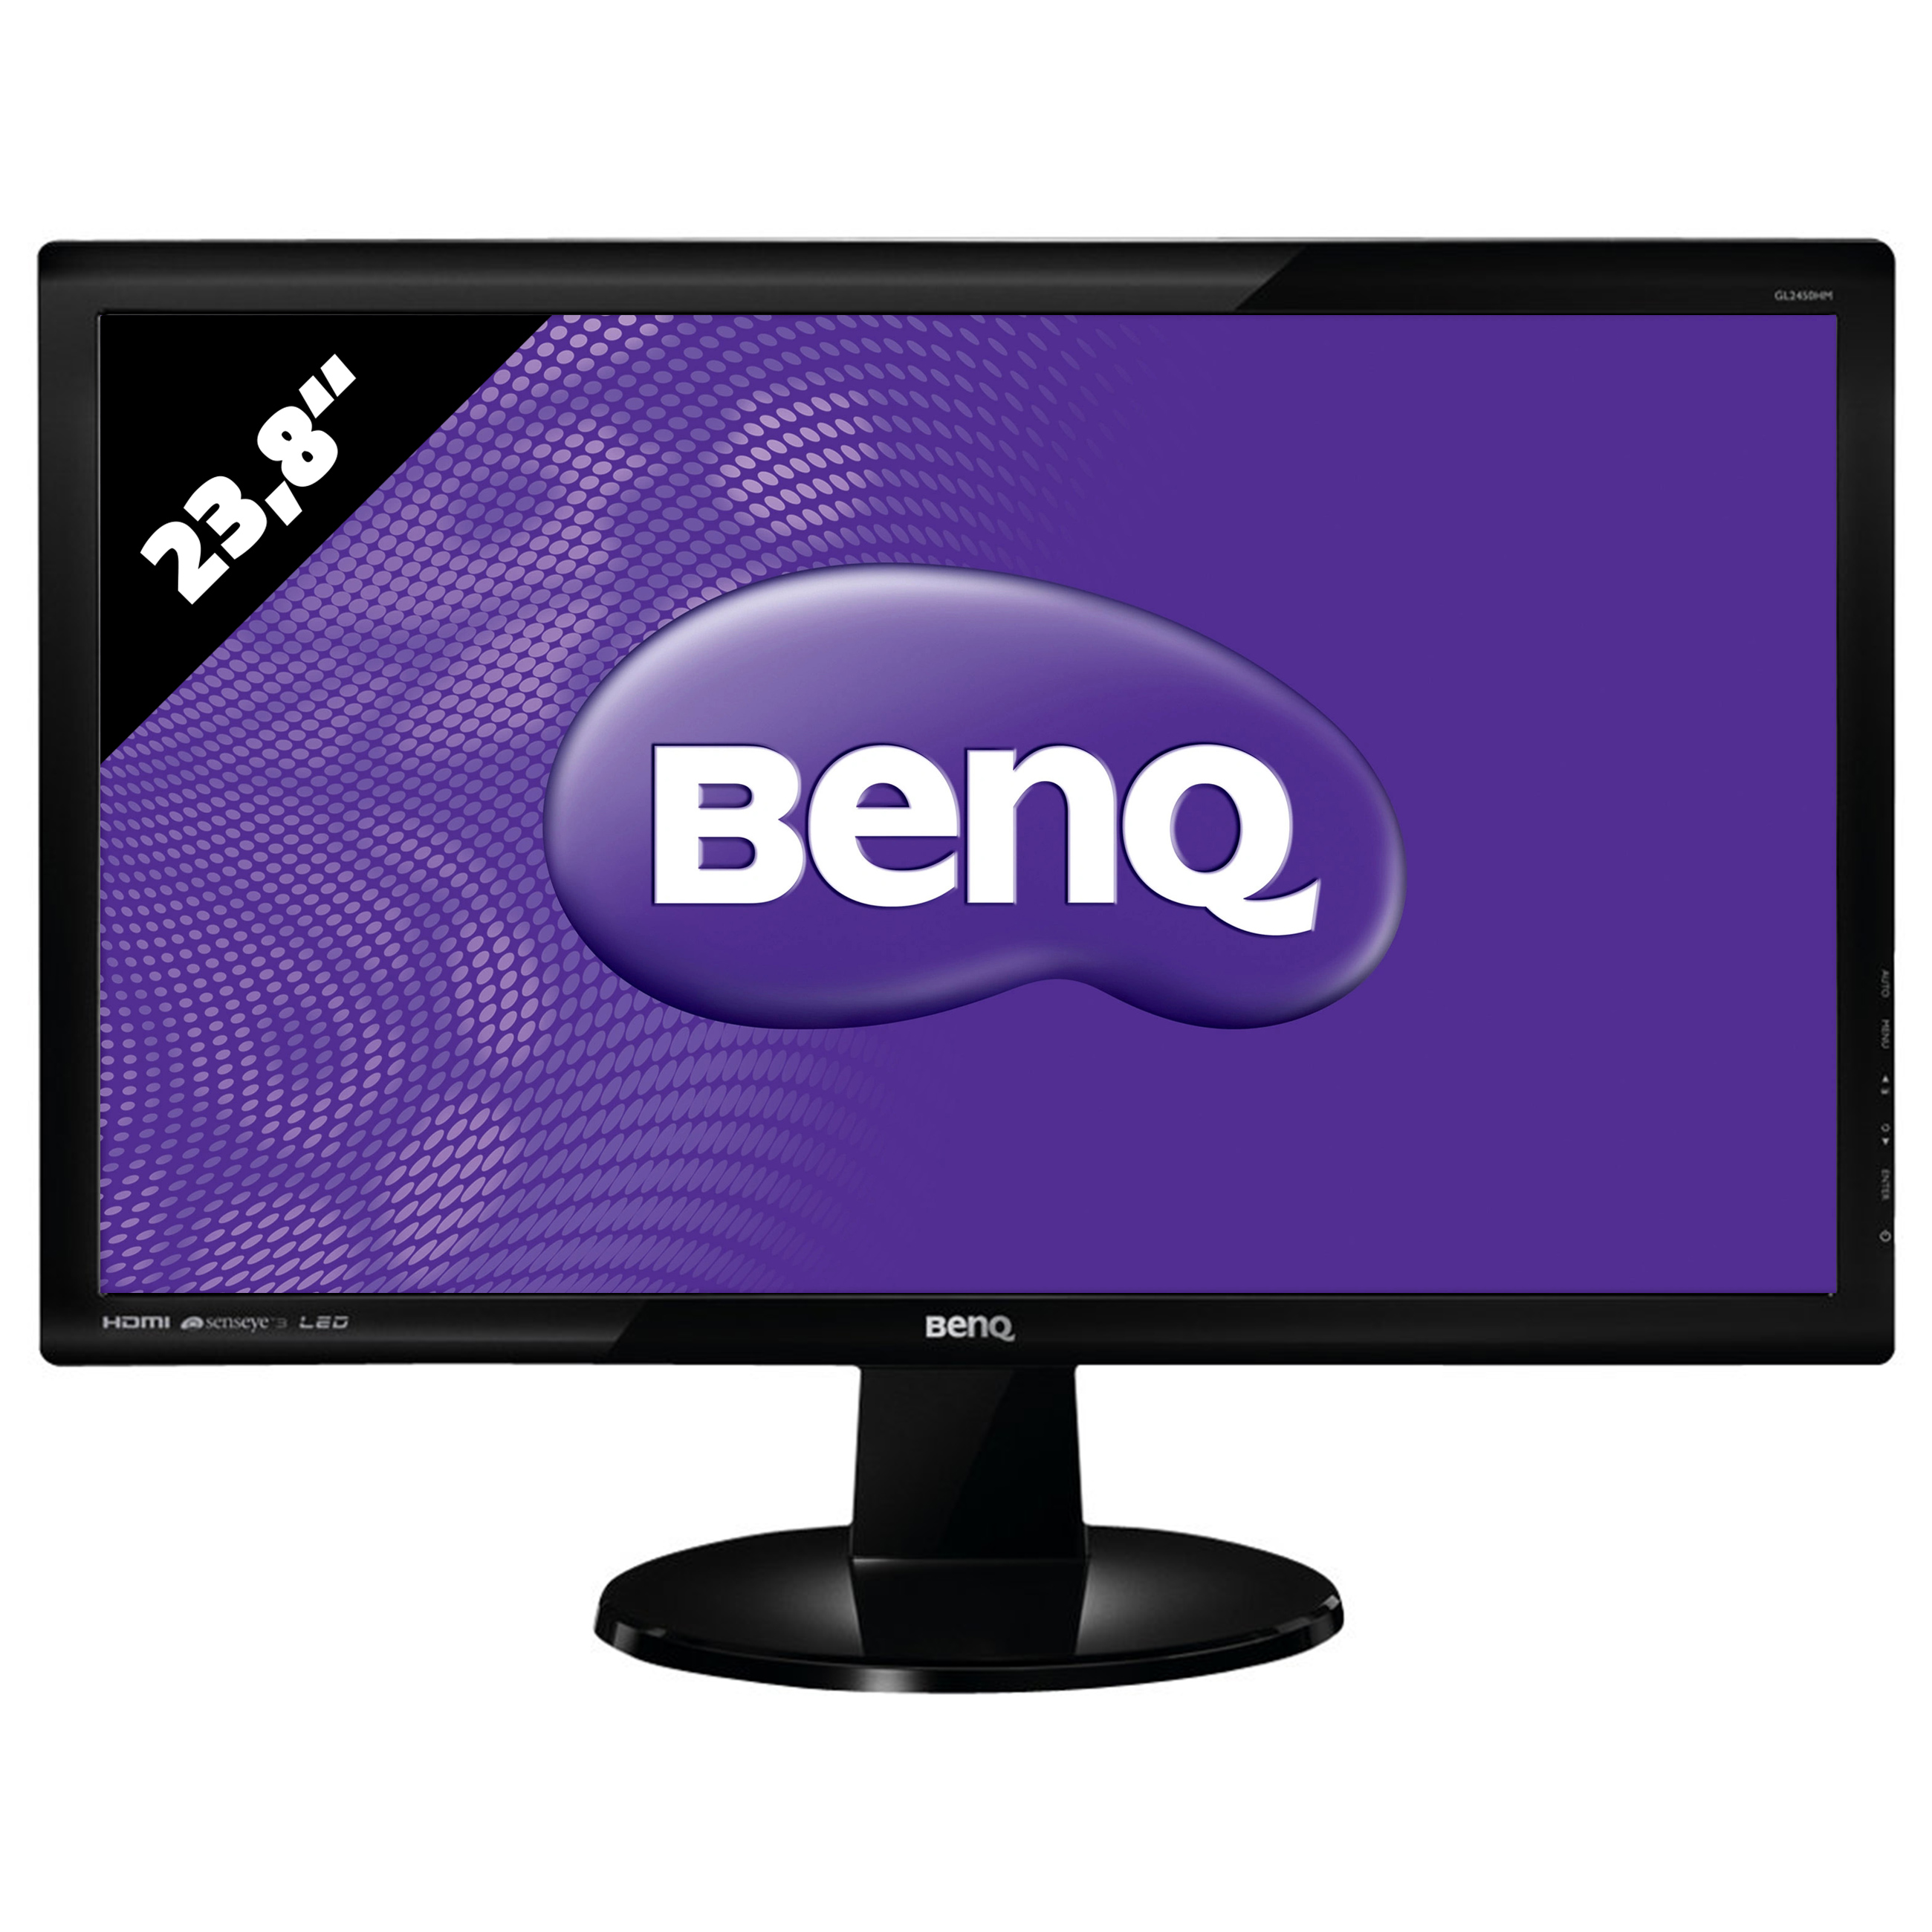 Benq LCD Monitor GL2450-B - 1920 x 1080 - FHDGut - AfB-refurbished